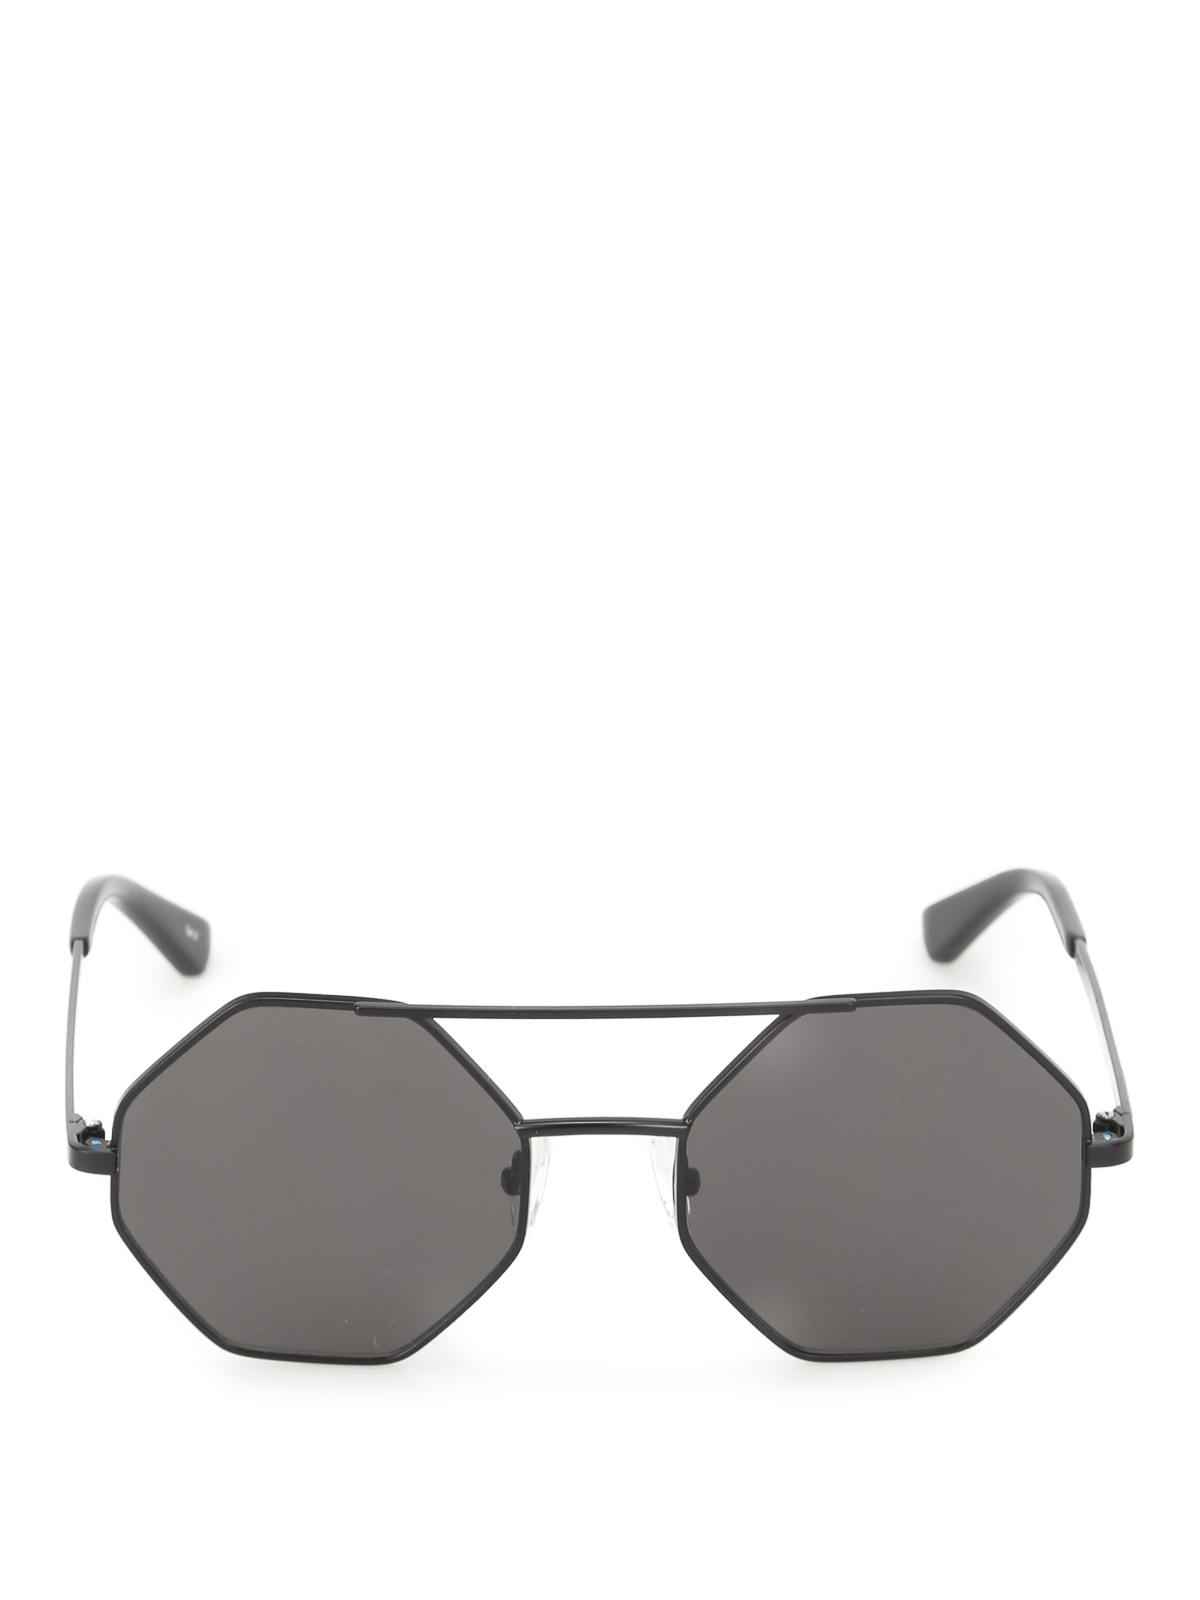 Black angular frame sunglasses by Mcq - sunglasses | iKRIX